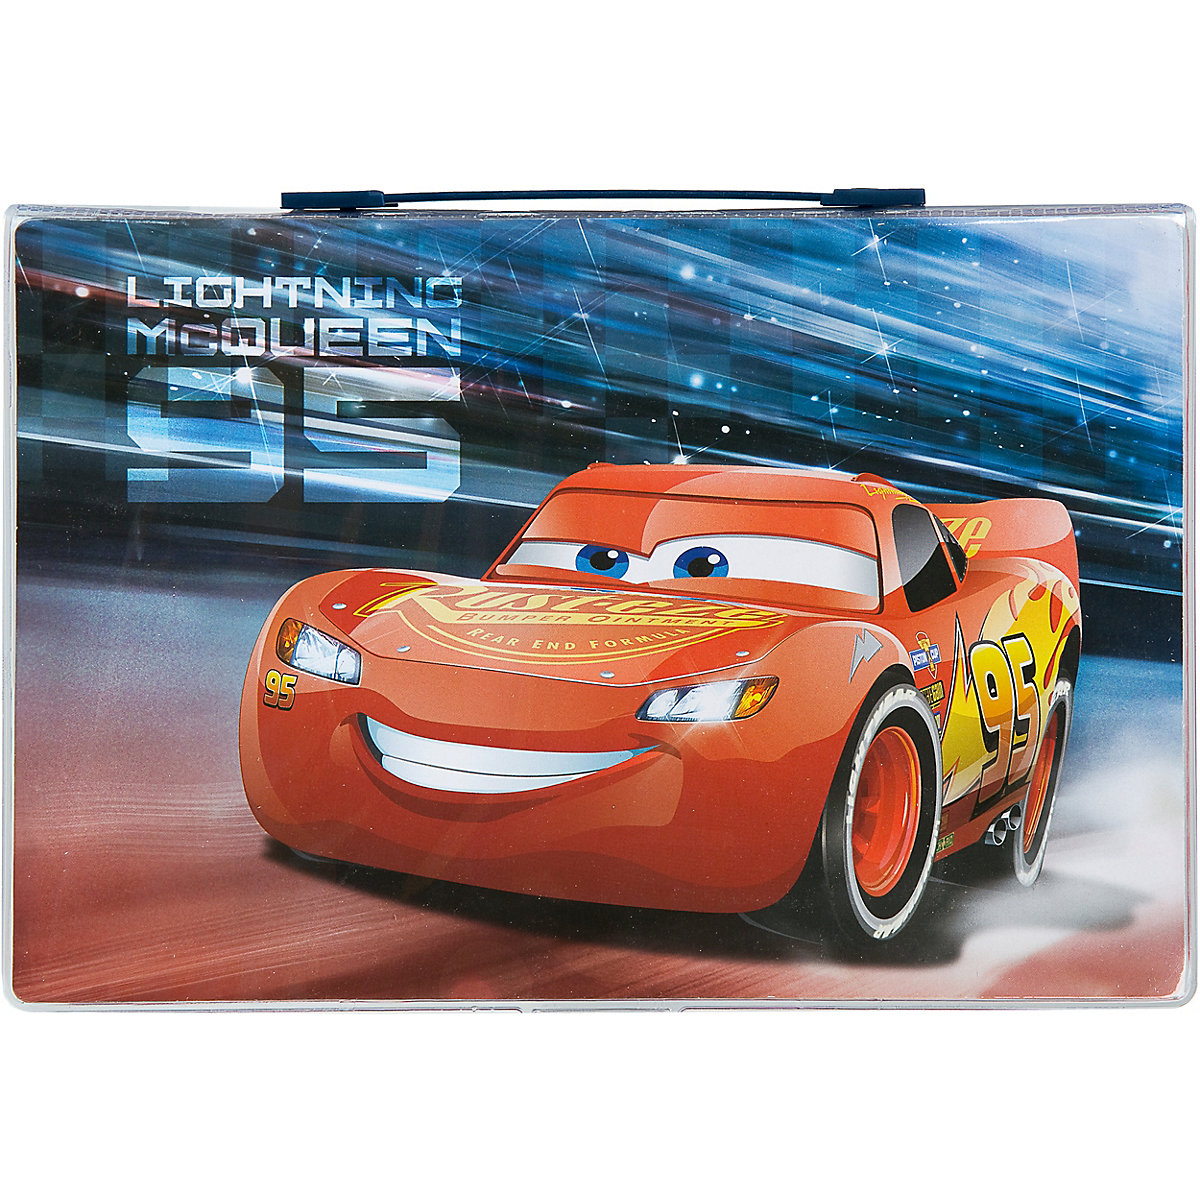 Super Malkoffer XXL Disney Cars, über 20 Teile, Disney Cars